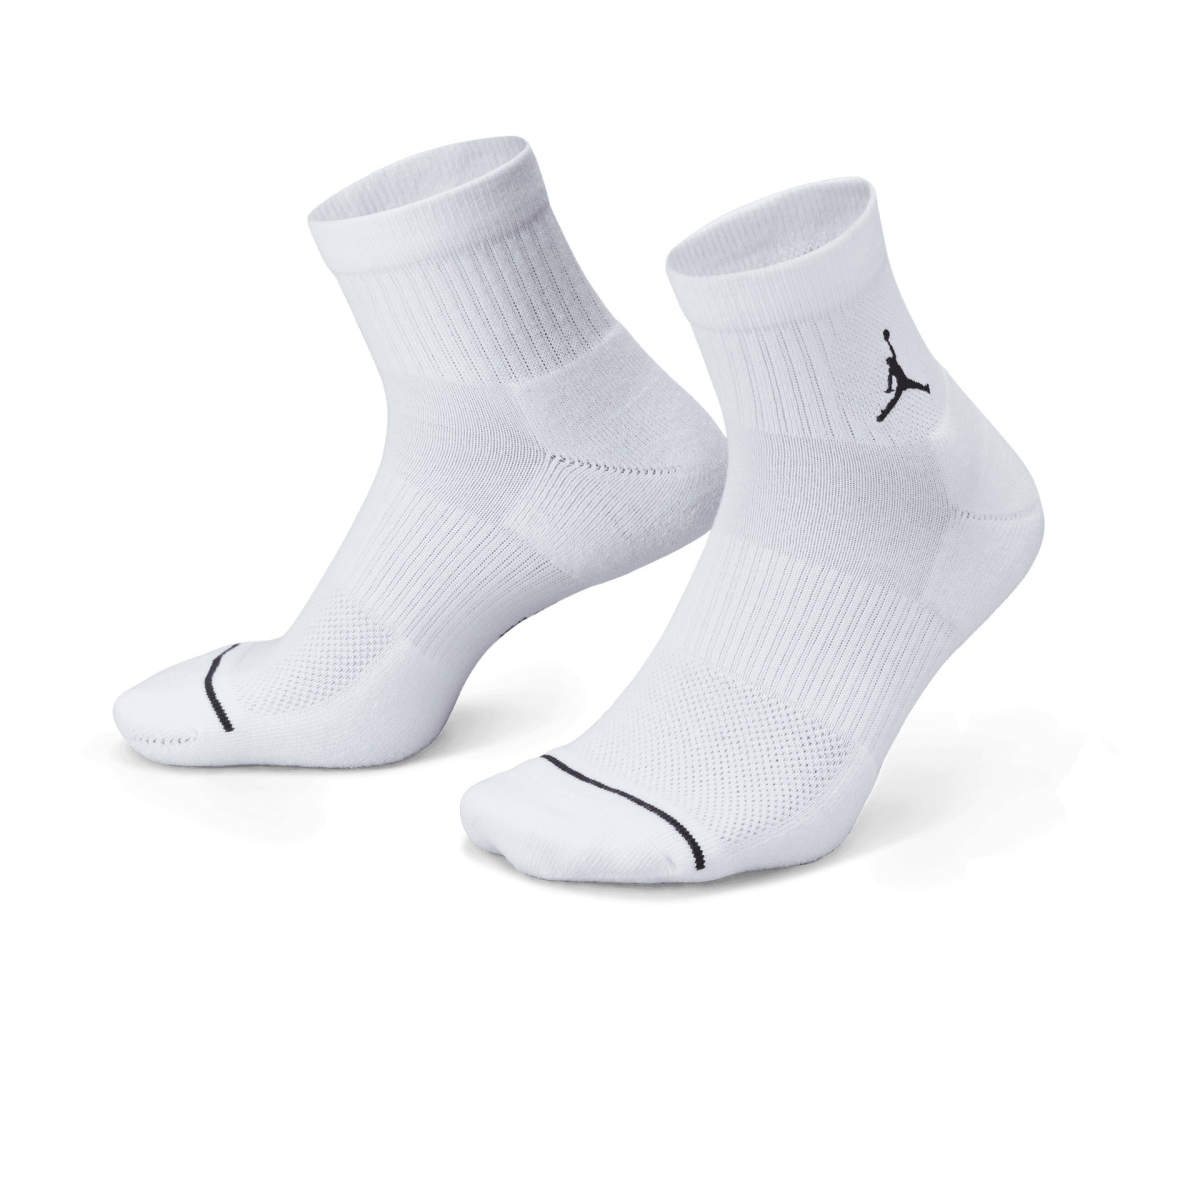 Jumpman ankle socks 3pack white